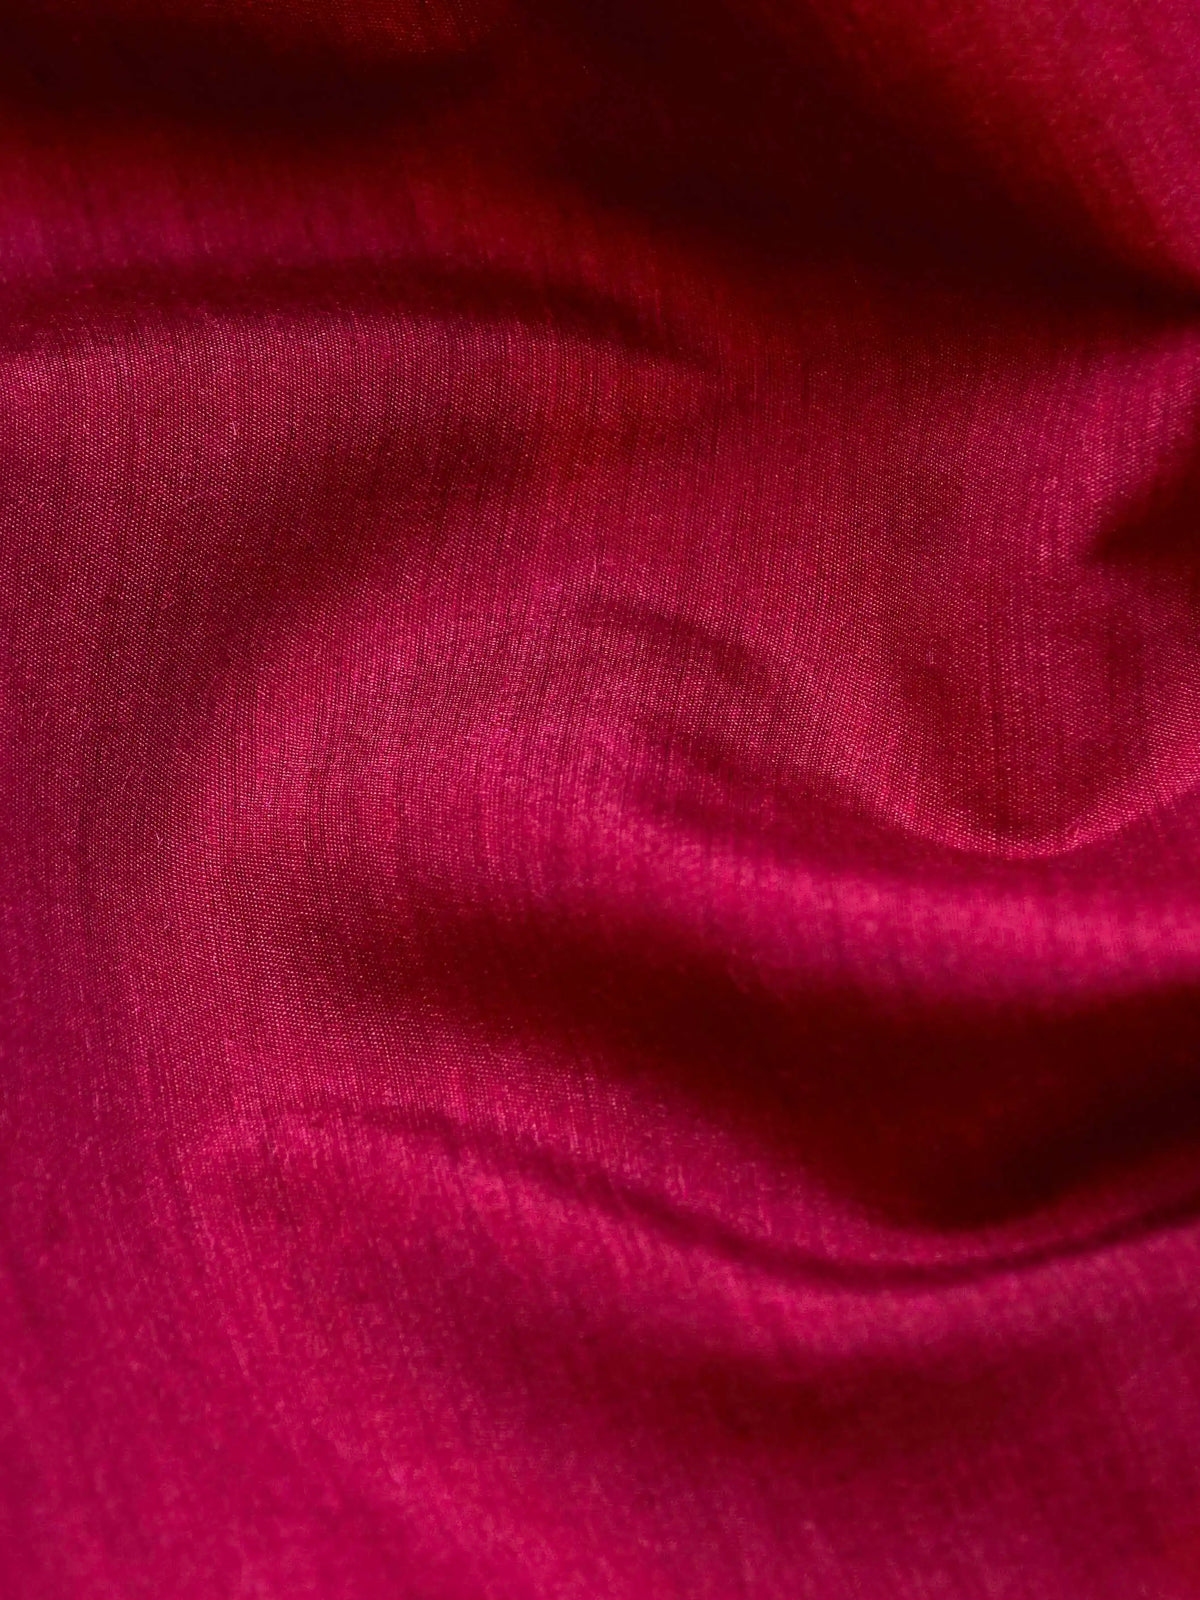 Handwoven Banarasi Pink Tussar Silk Suit